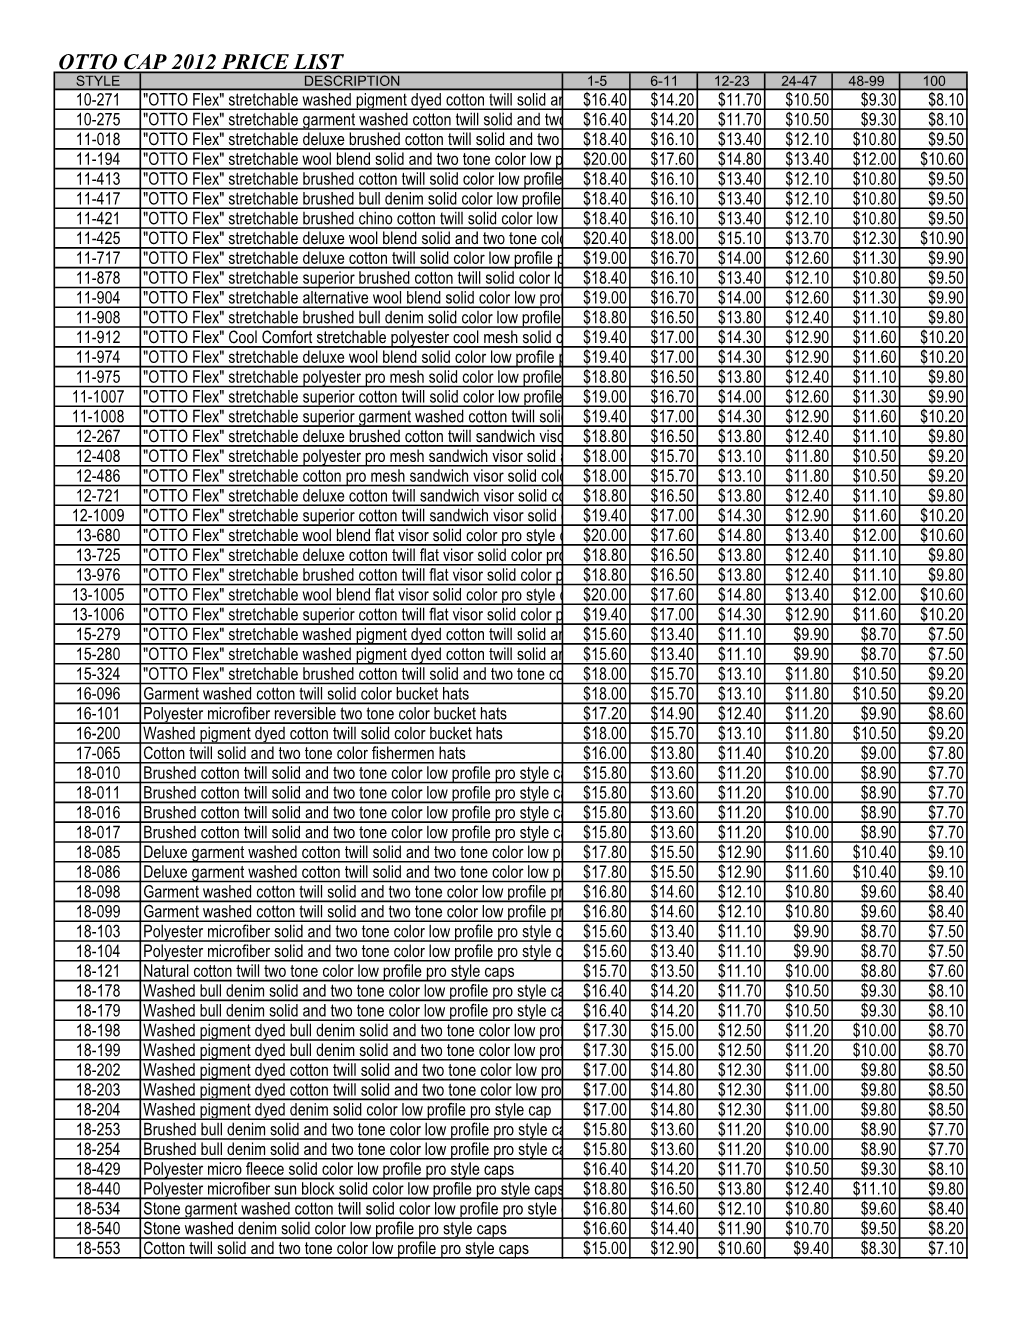 Otto Cap 2012 Price List